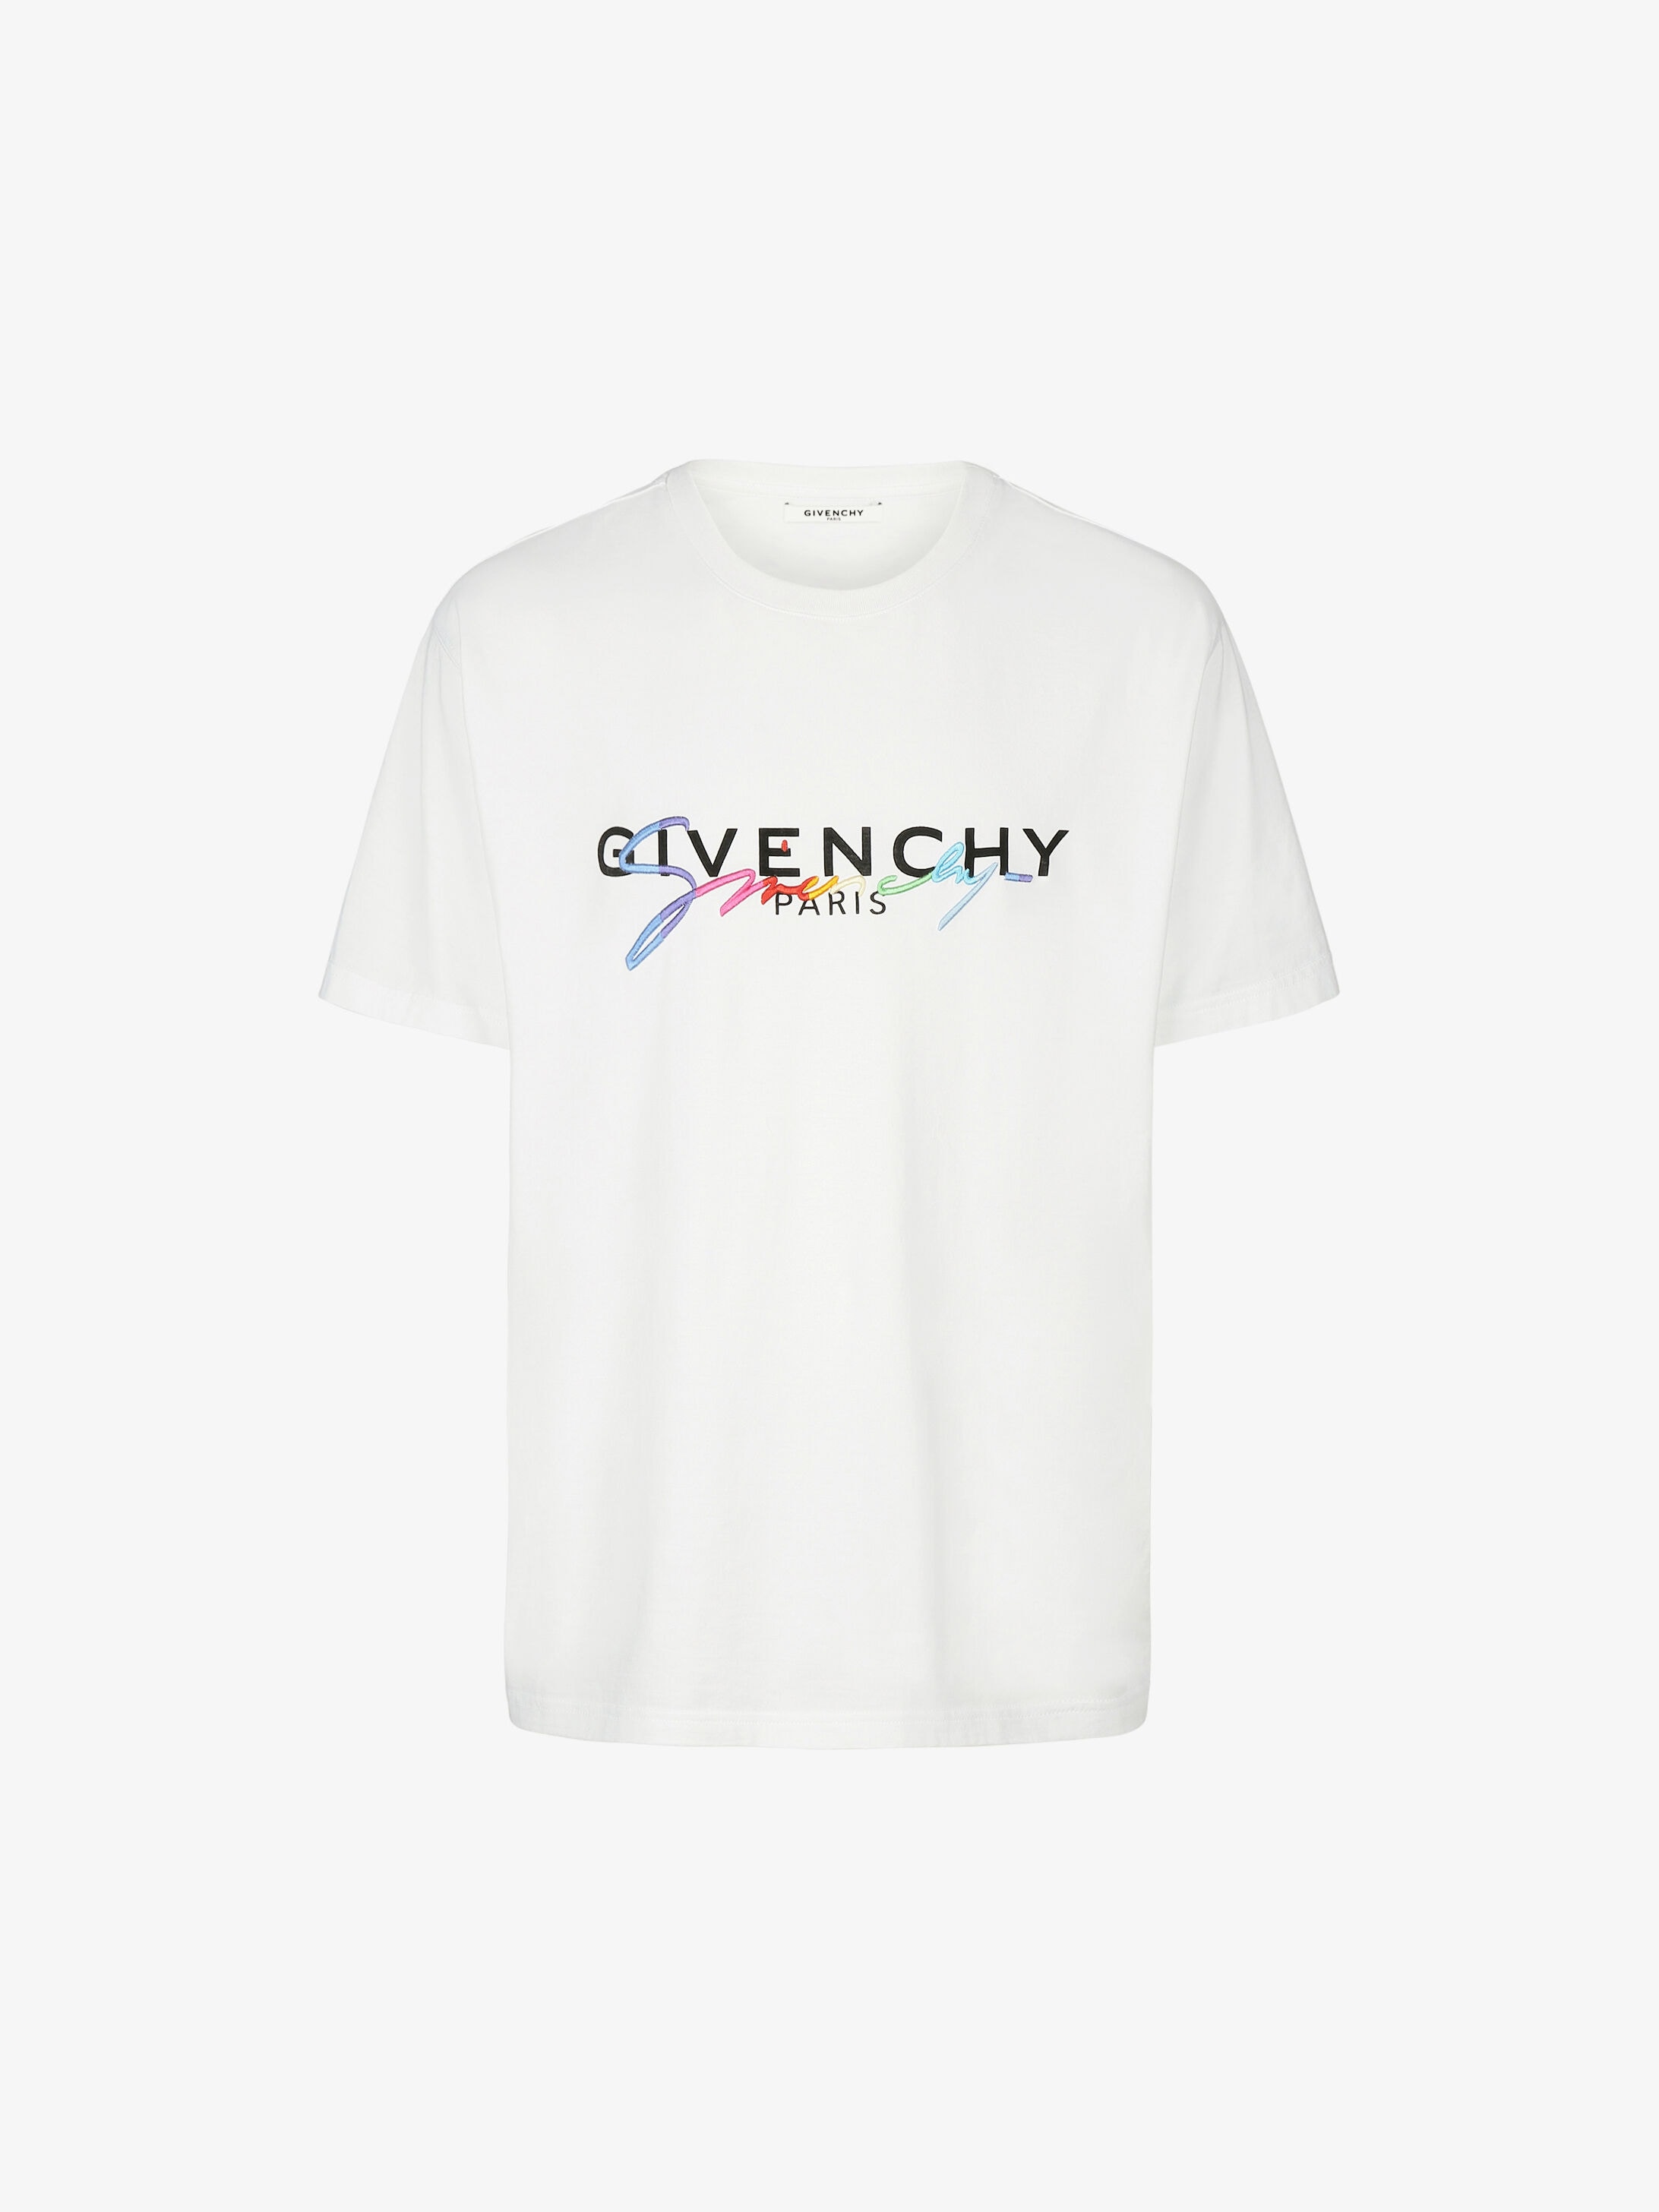 Givenchy Clothing Size Chart